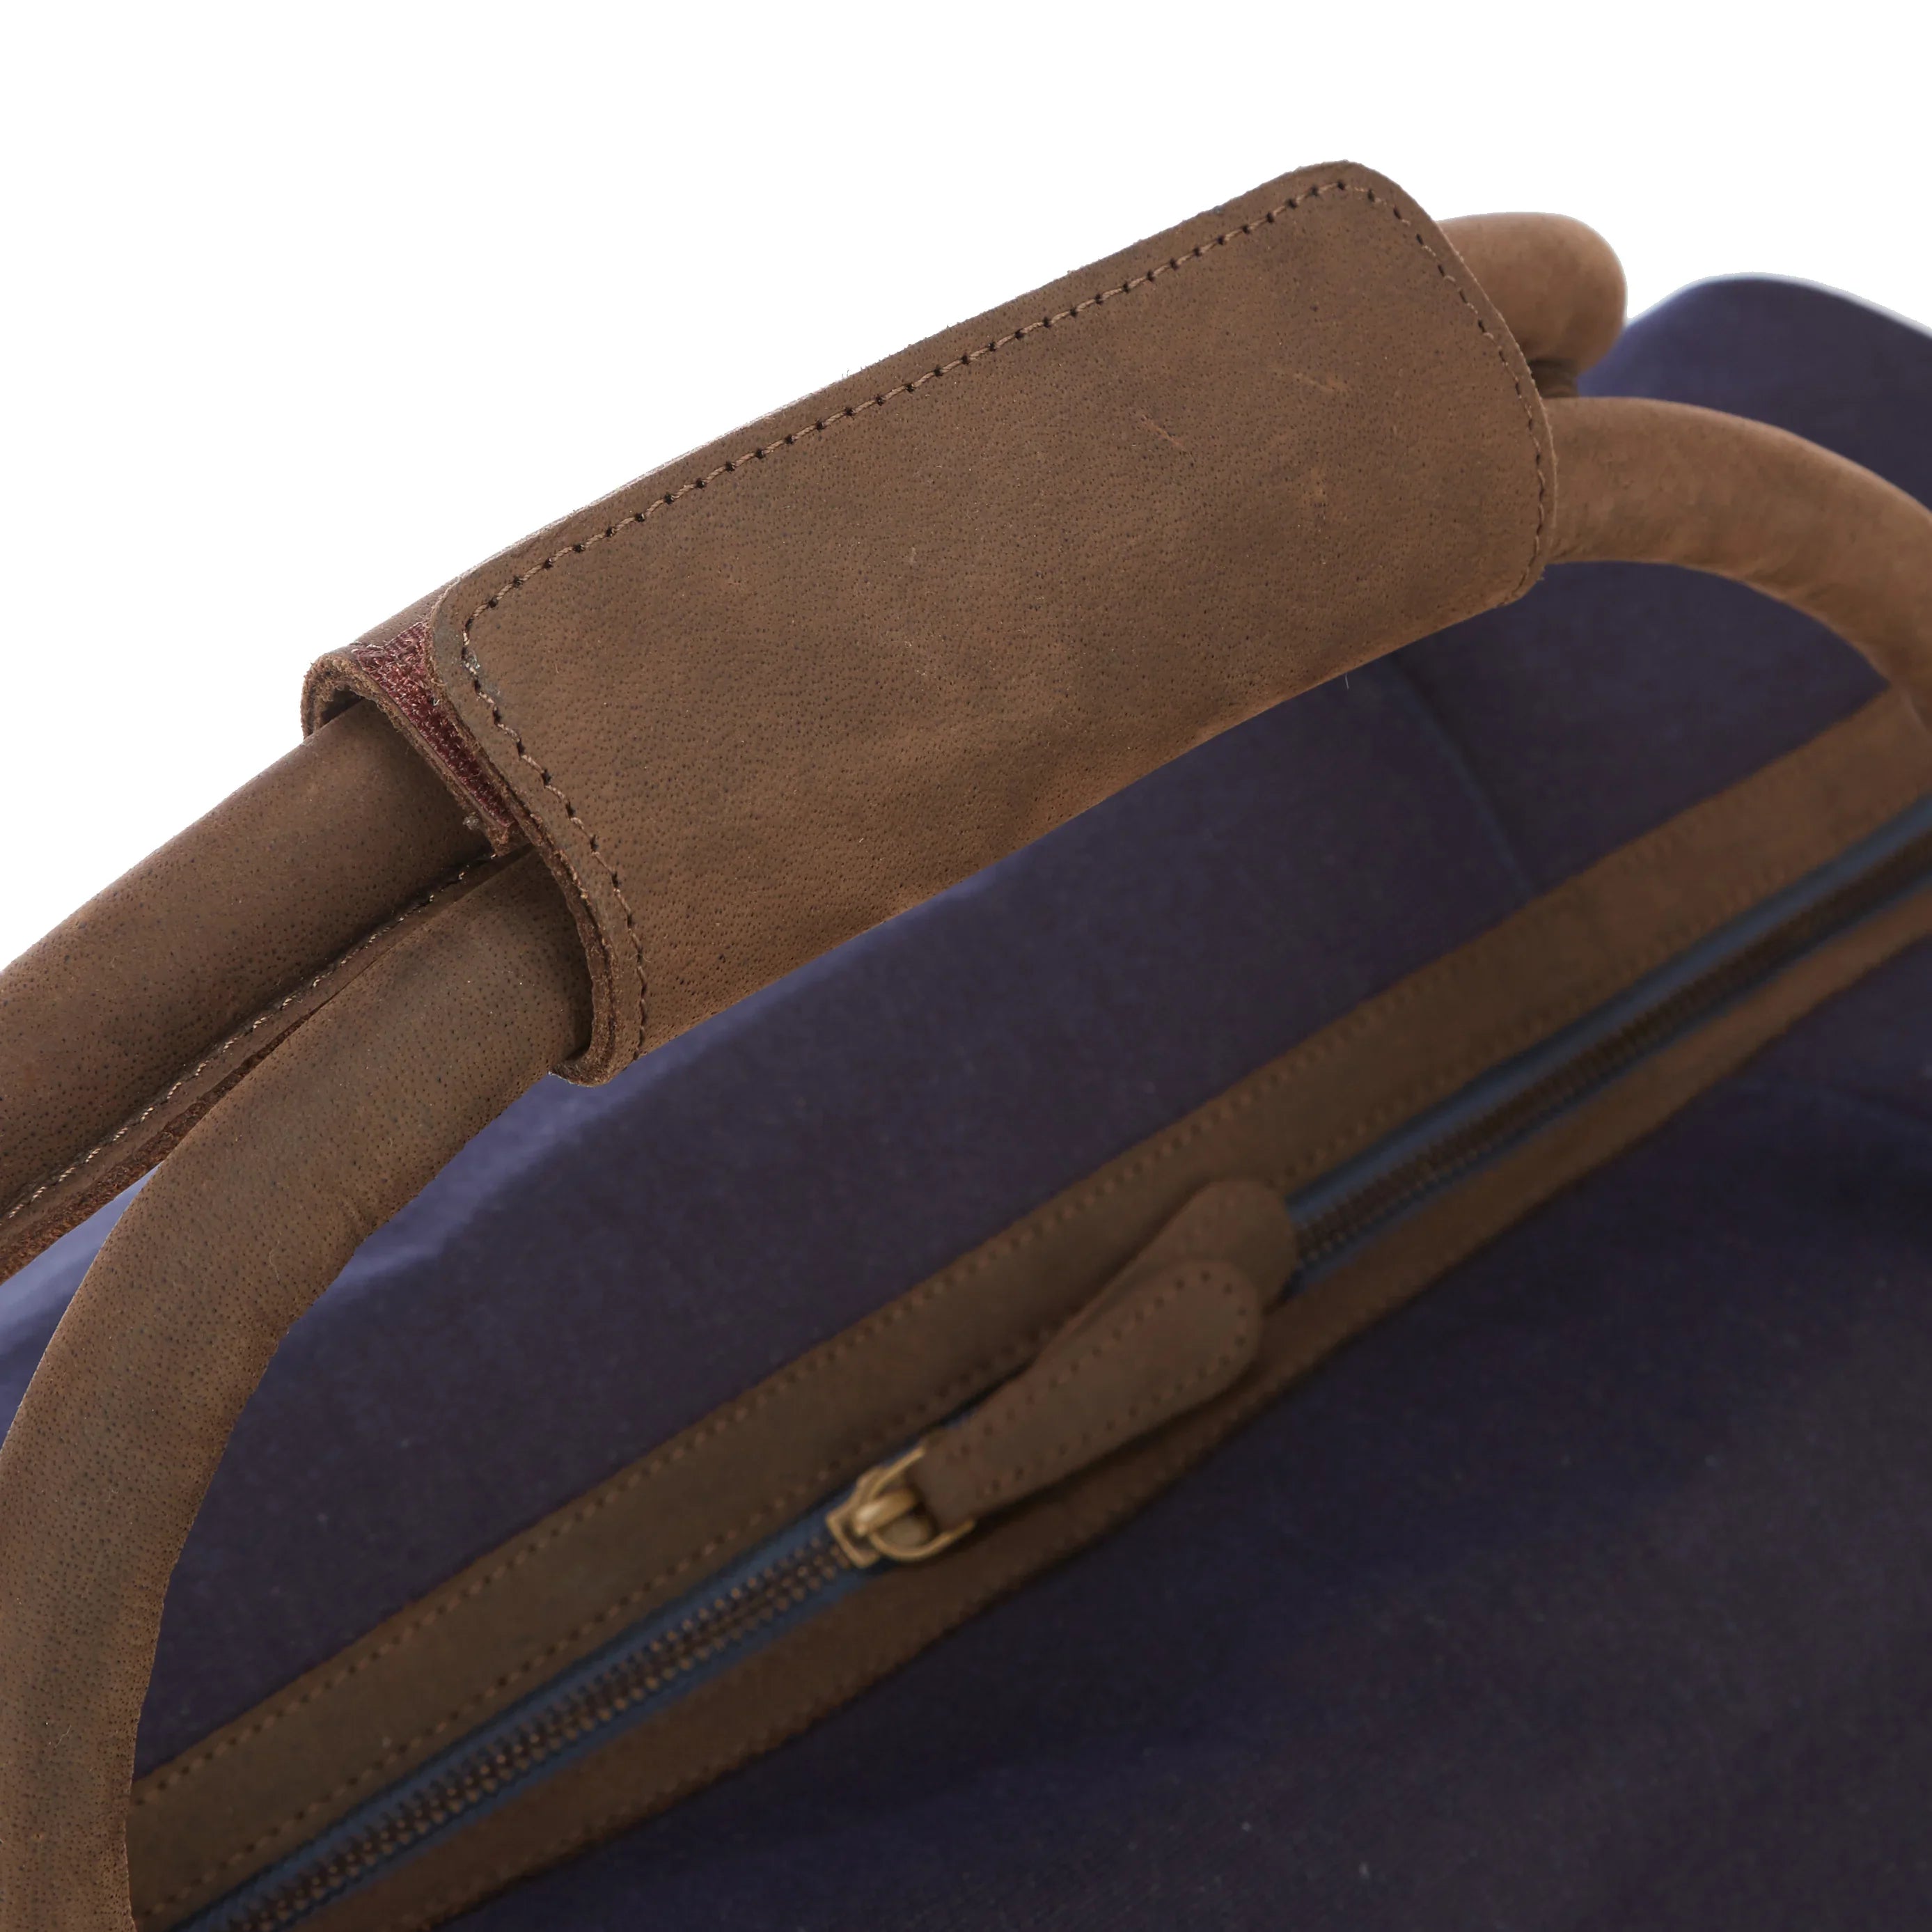 Dermata Business Travel Bag 50 cm - dark blue/brown